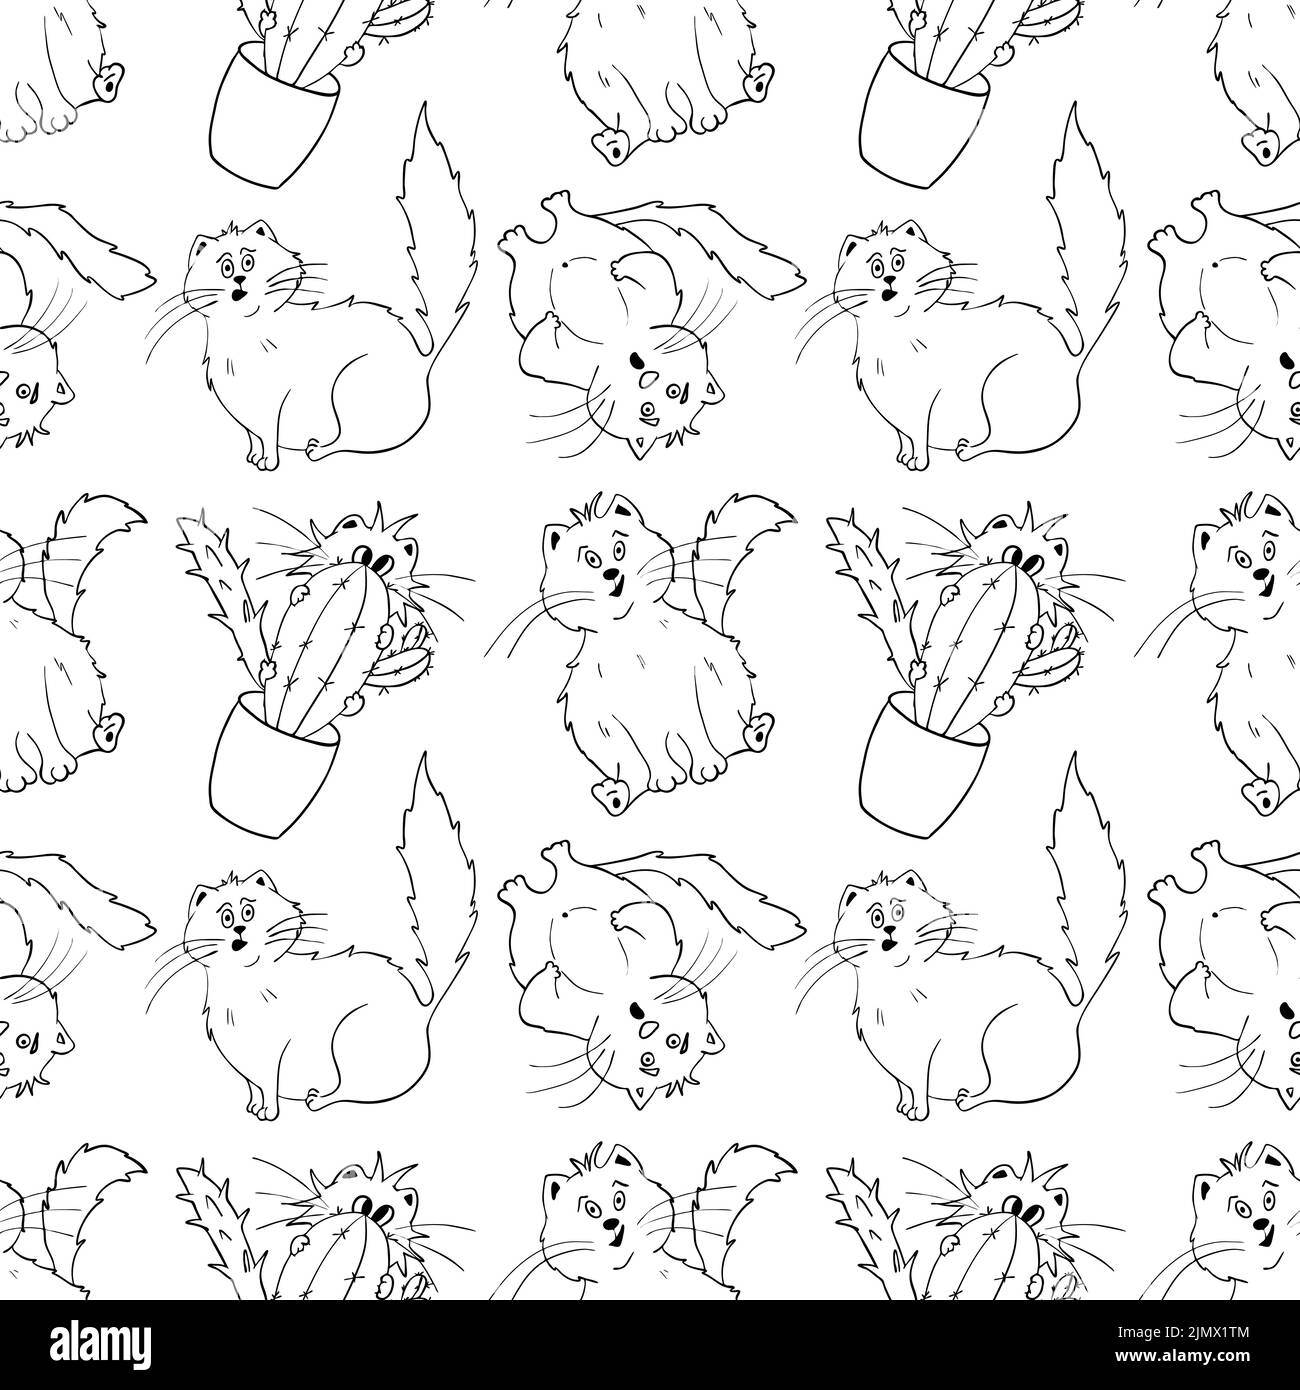 Divertido patrón de gato. Diseño vectorial sin costuras con divertidos gatos. Ilustración de garabatos. Un gato abrazando un cactus. Clipart Ilustración del Vector